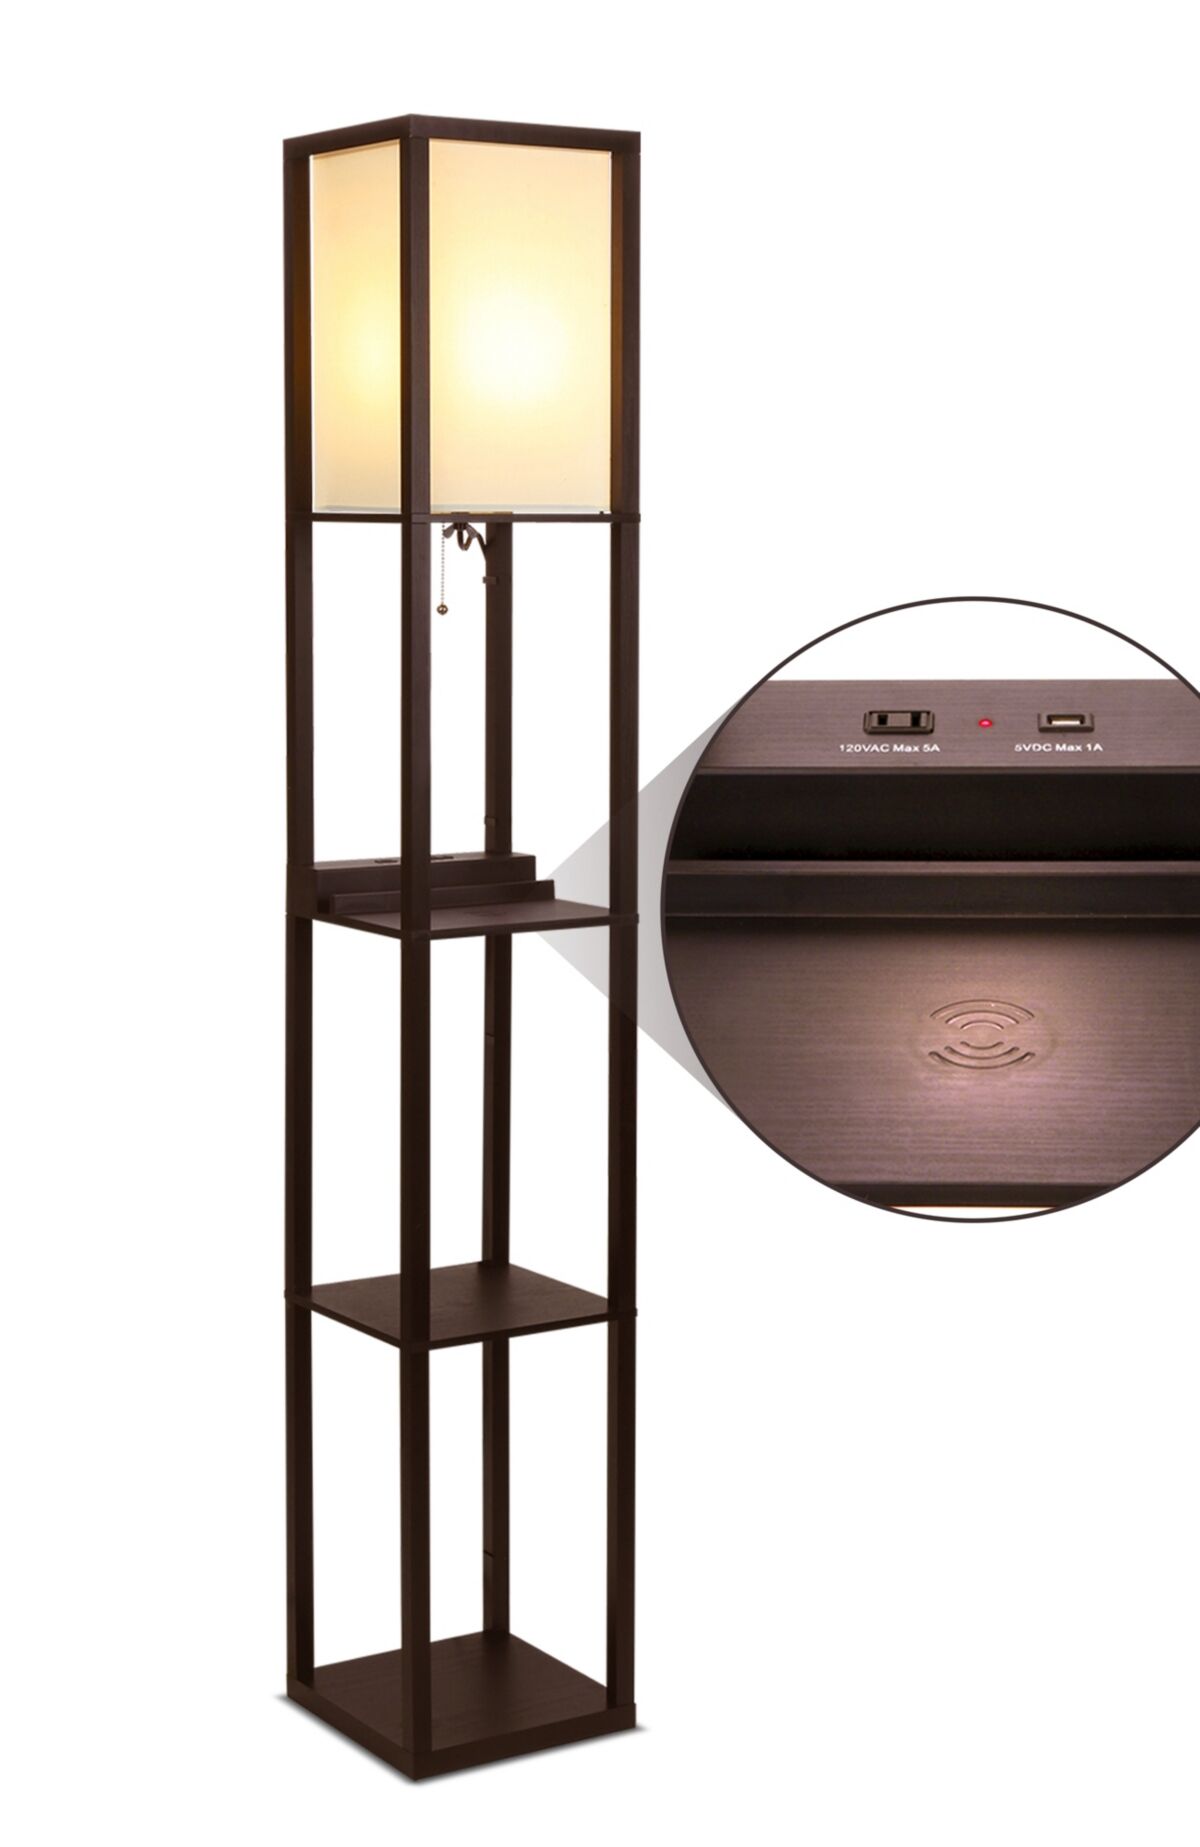 Brightech Maxwell Shelf & Led Floor Lamp - Usb Port, Outlet, Wireless Charging Pad - Havana Brown